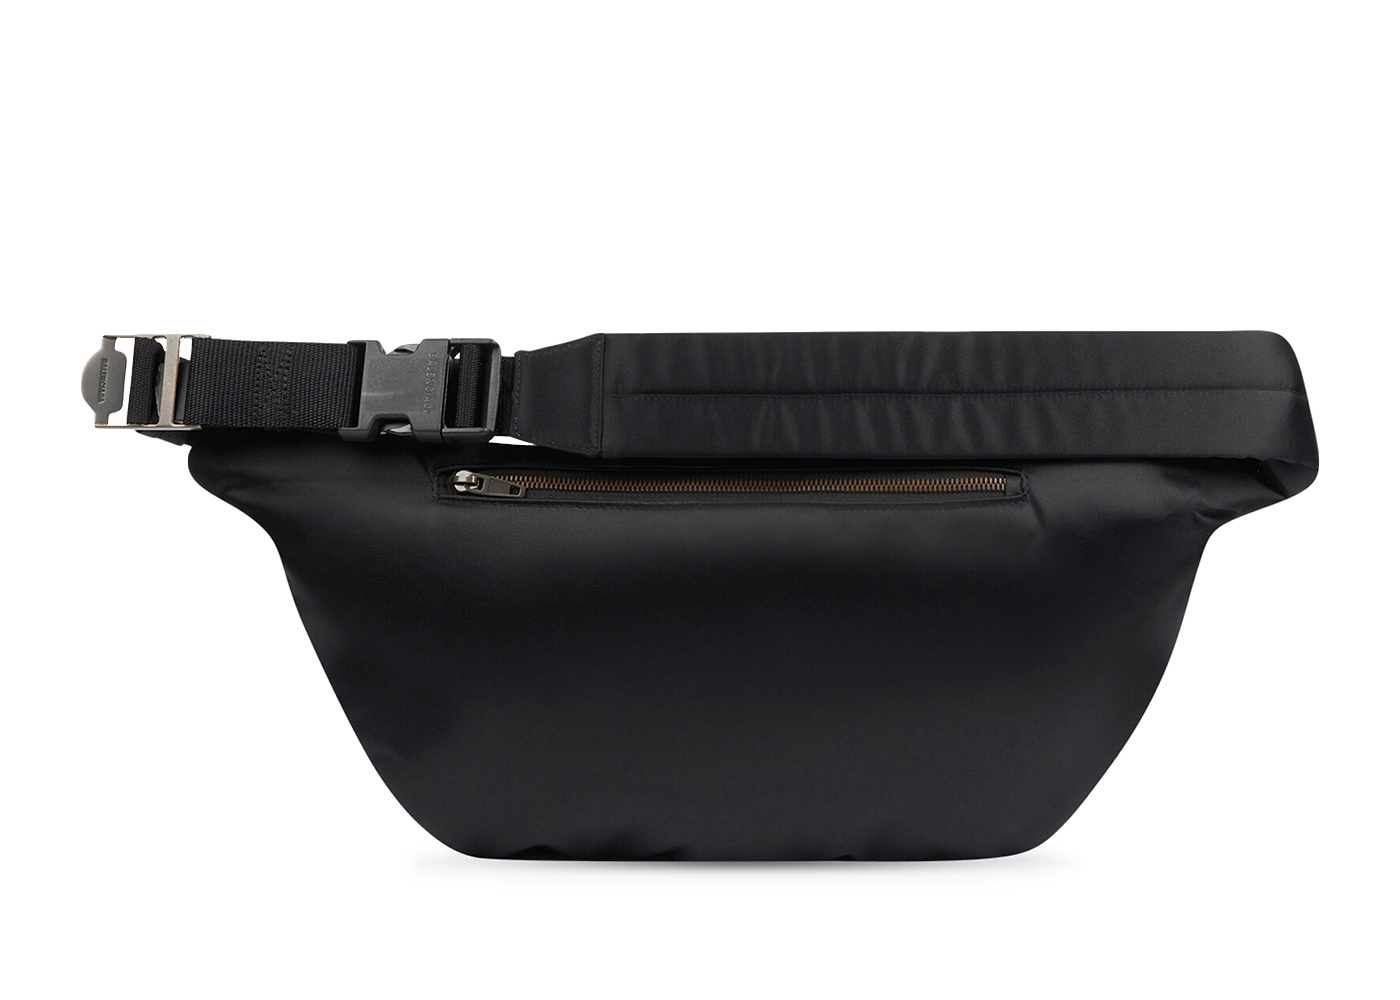 Balenciaga Oversized XXL Belt Bag Black in Recycled Bomber Nylon